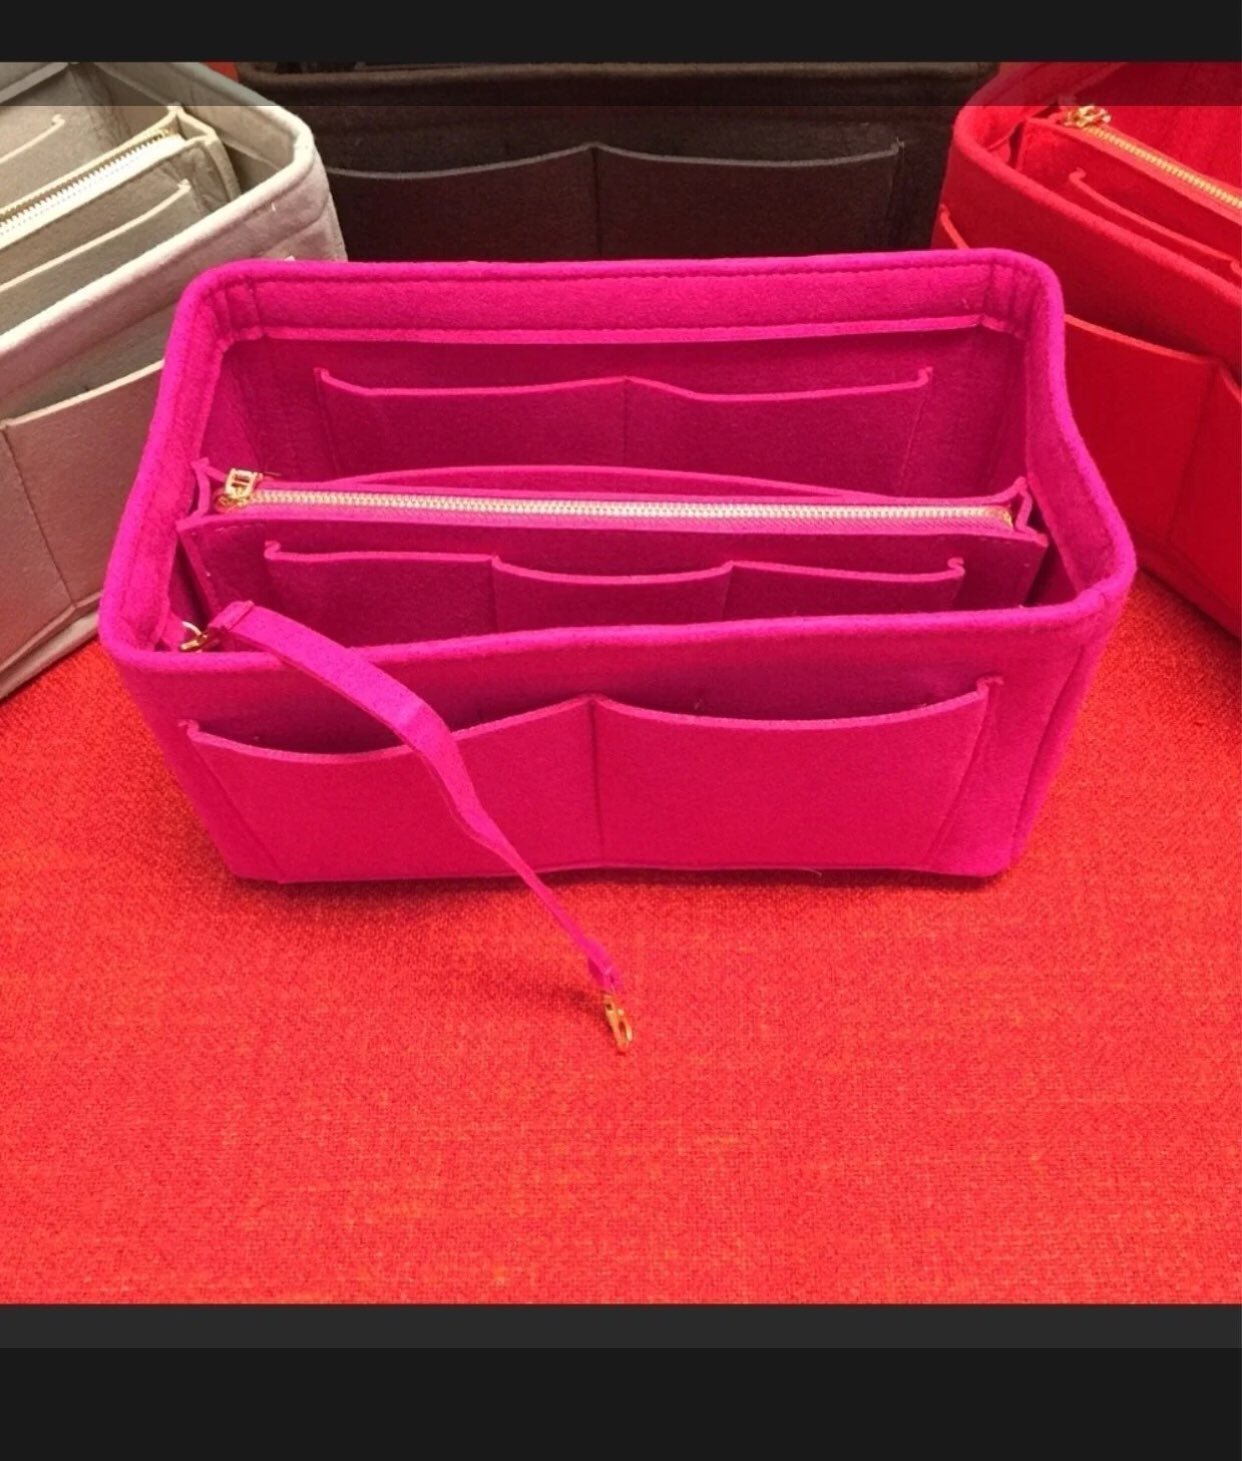 Hot pink/pivione tote bag organizer GeeOuDFSO